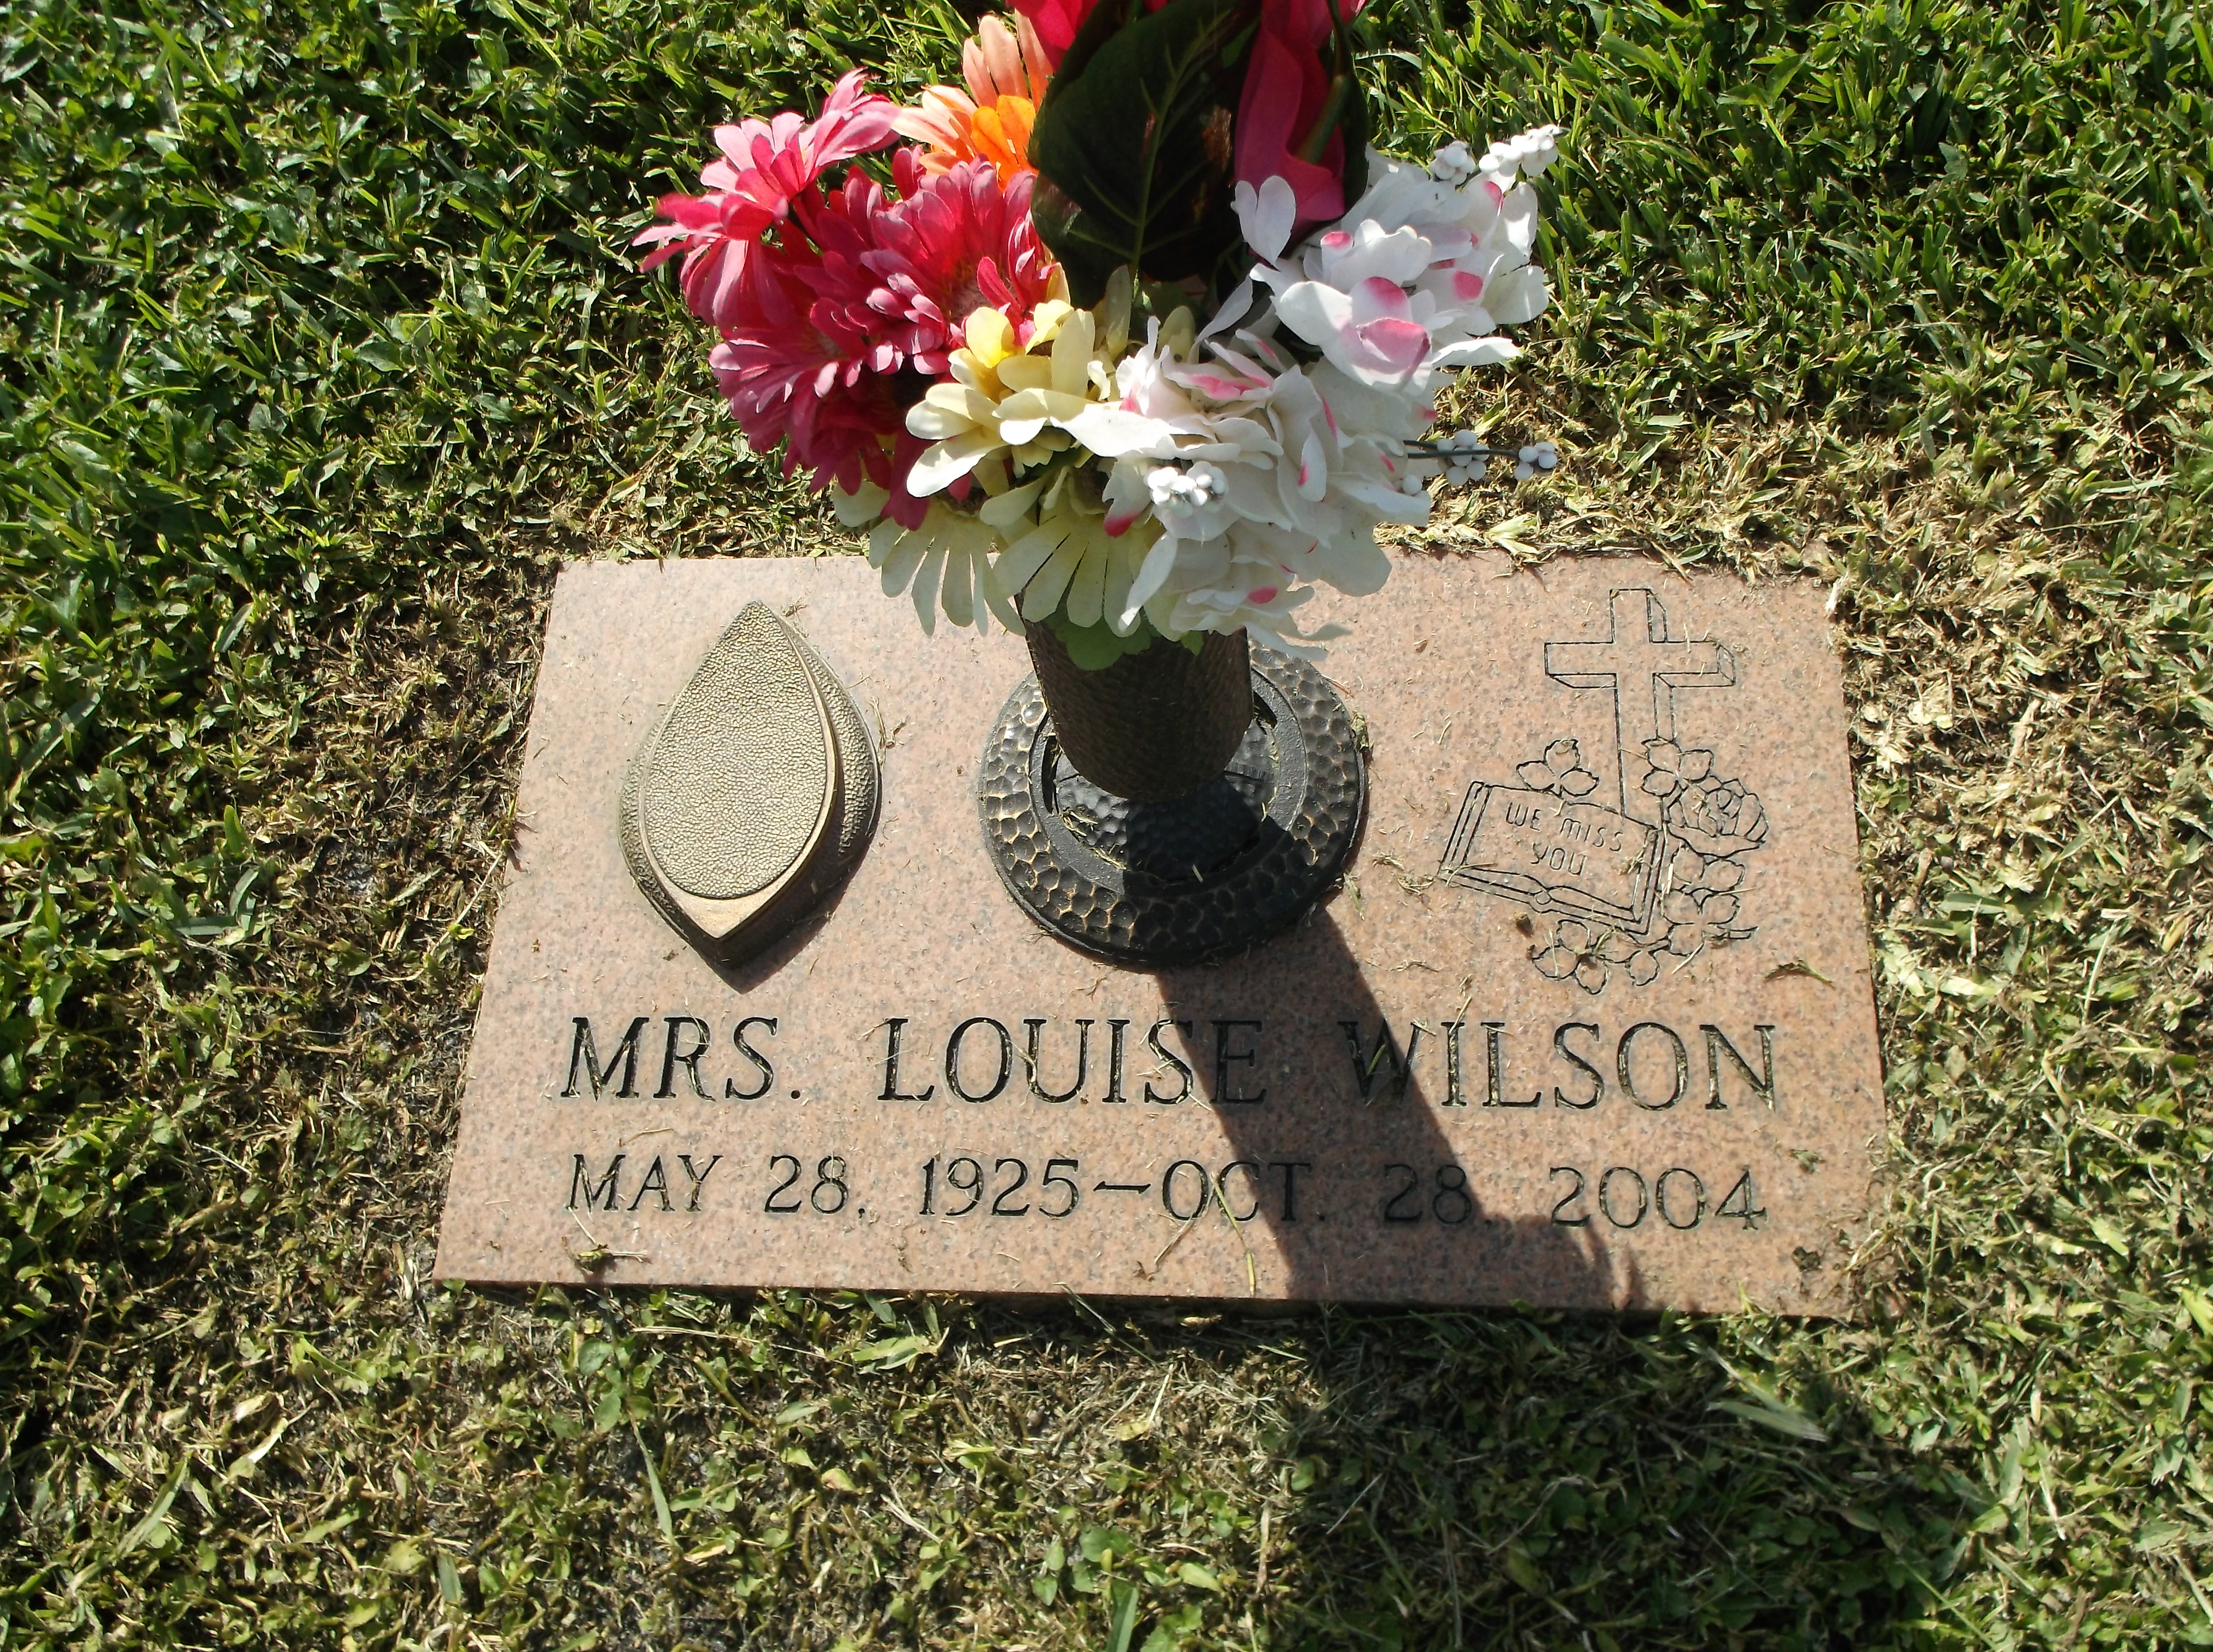 Louise Wilson